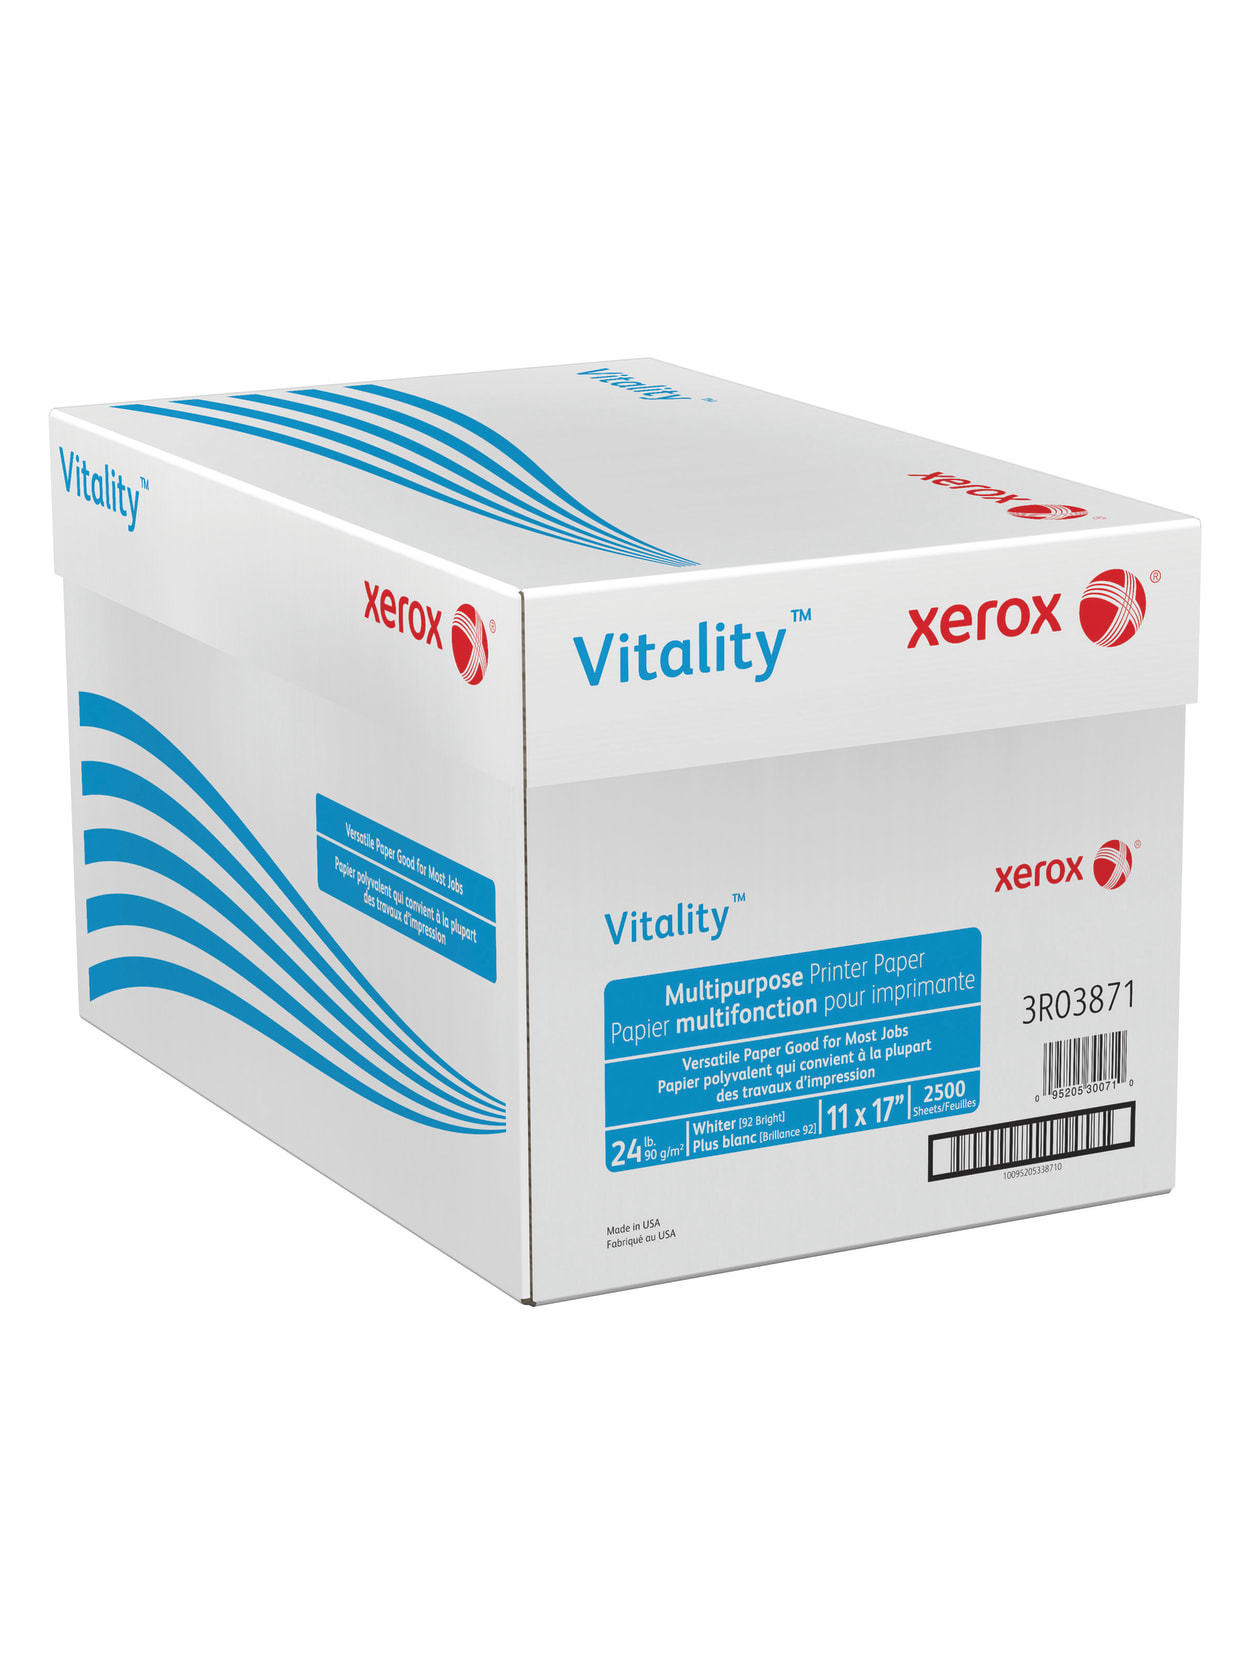 Xerox Vitality Multi Use Printer Paper Ledger Size 11 X 17 92 U S